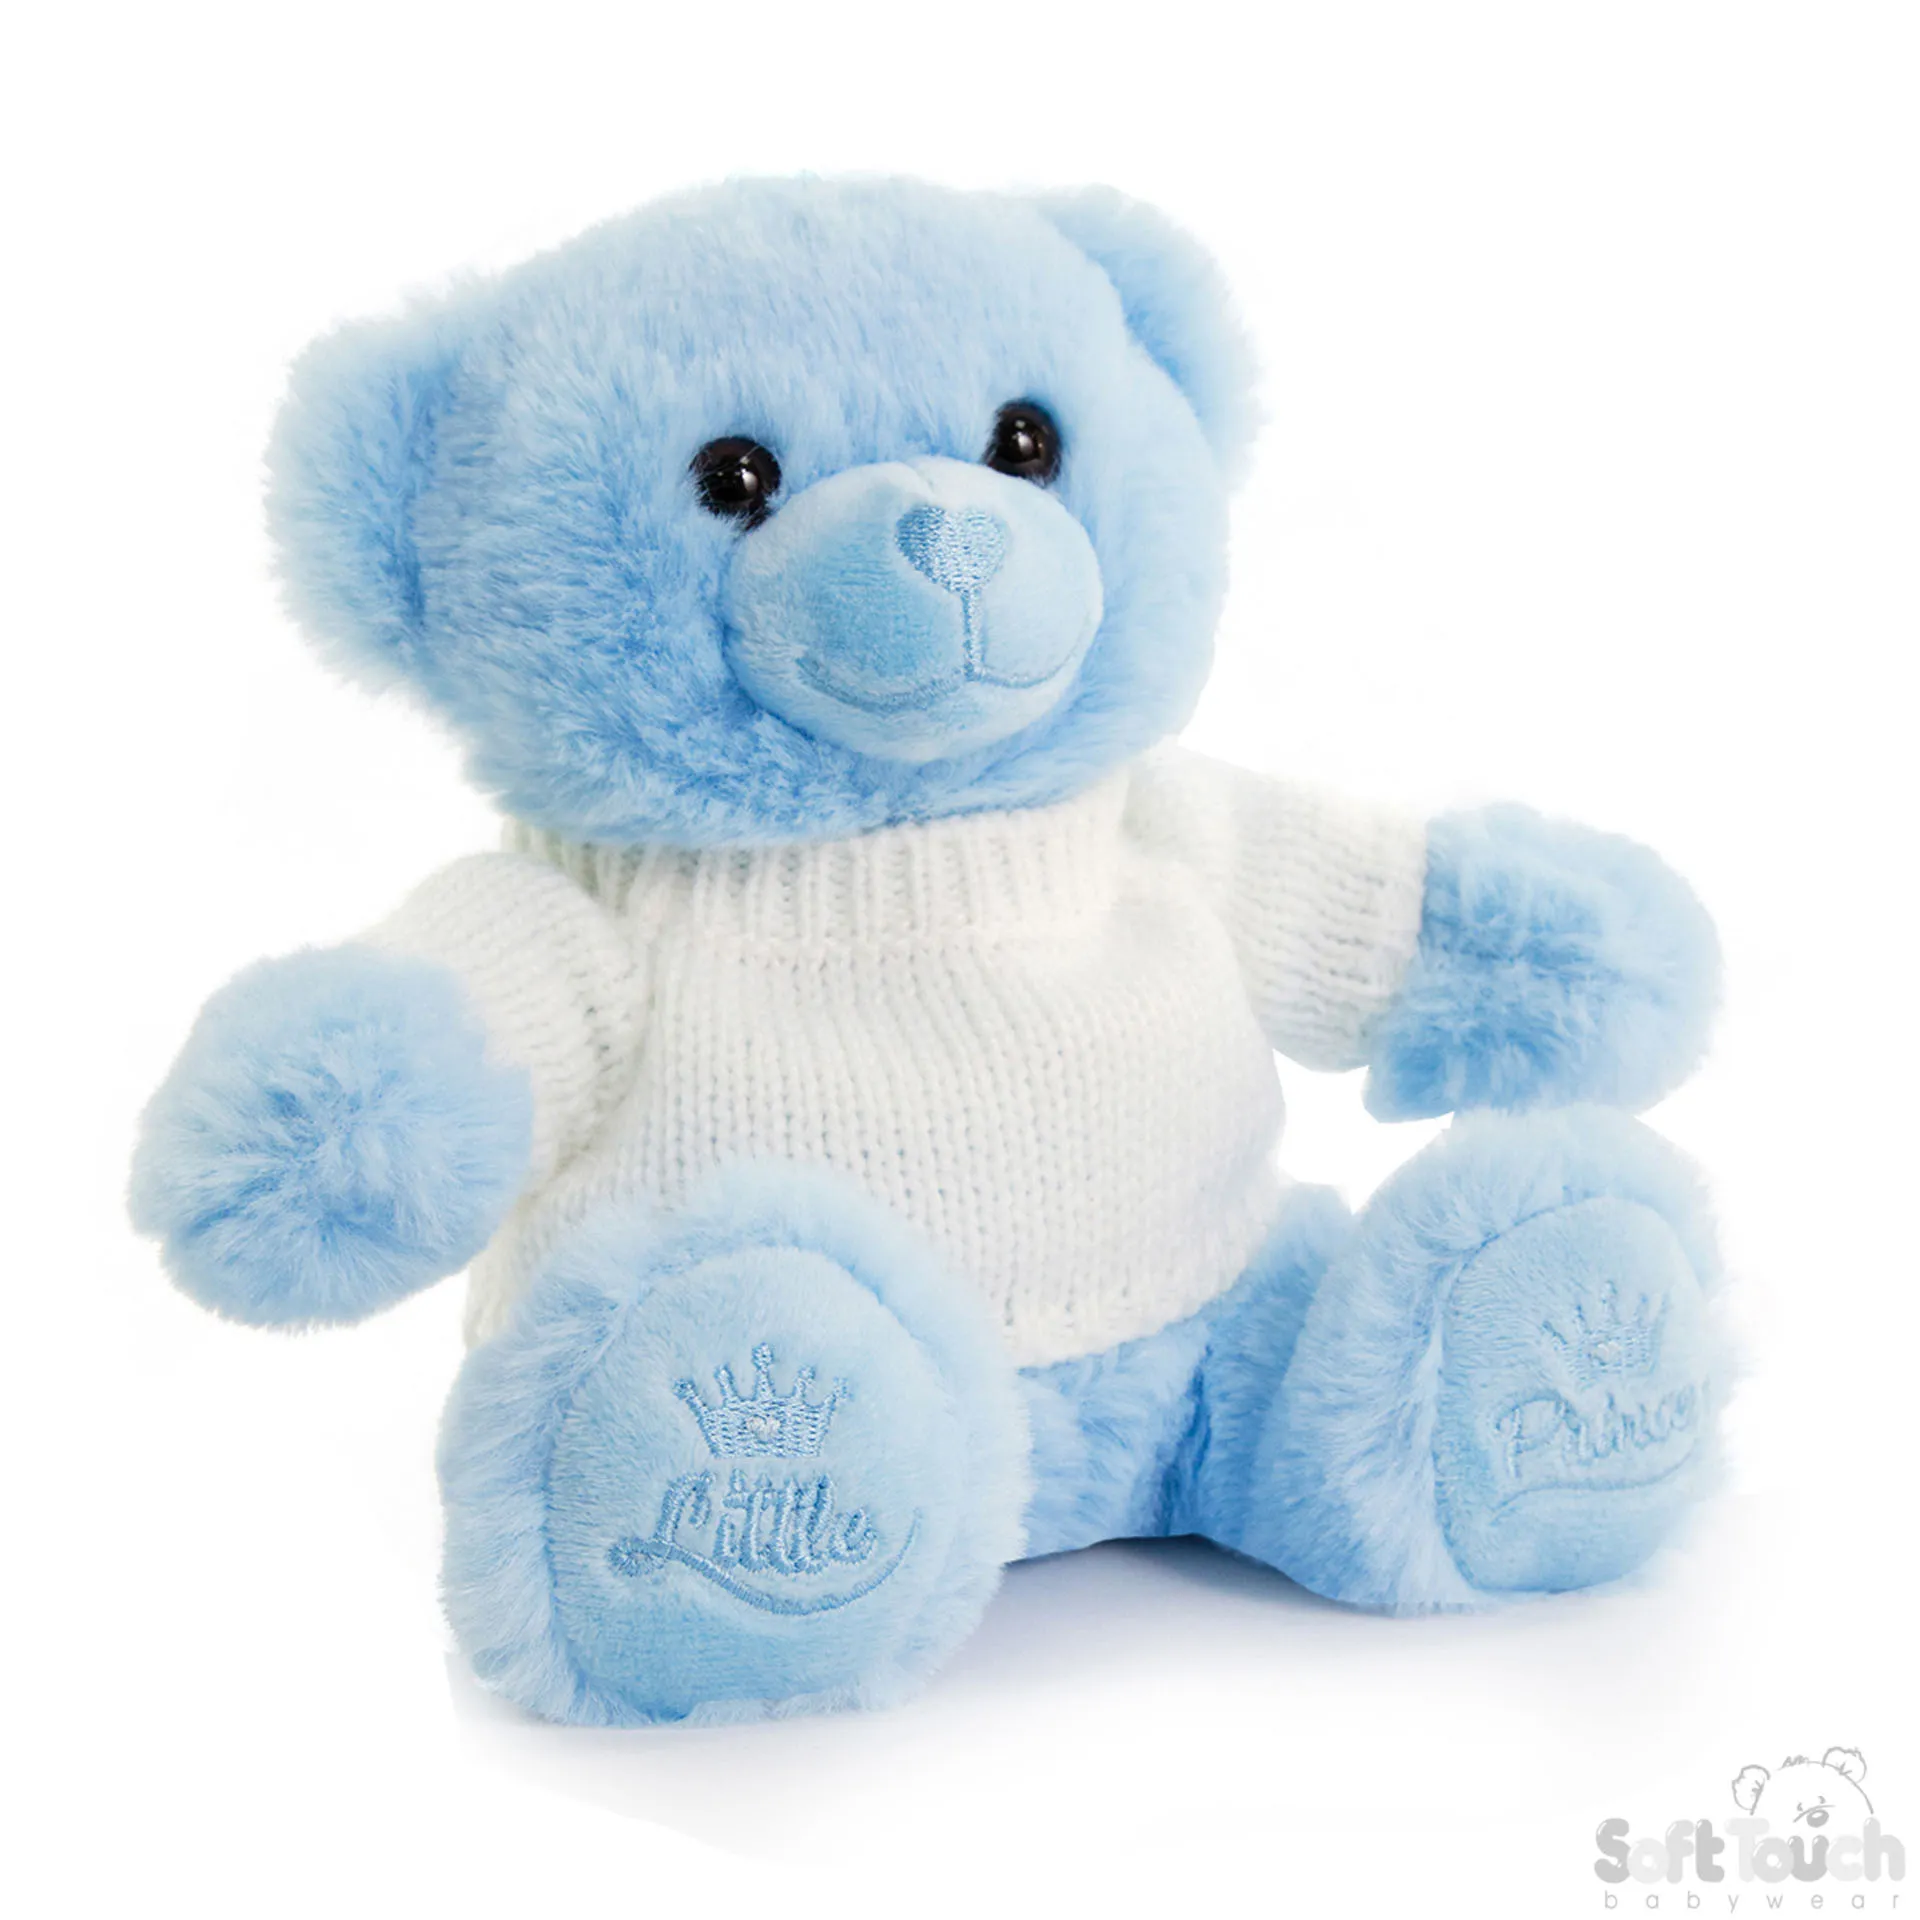 SOFT TOUCH blue teddy bear with jumper TB320-B